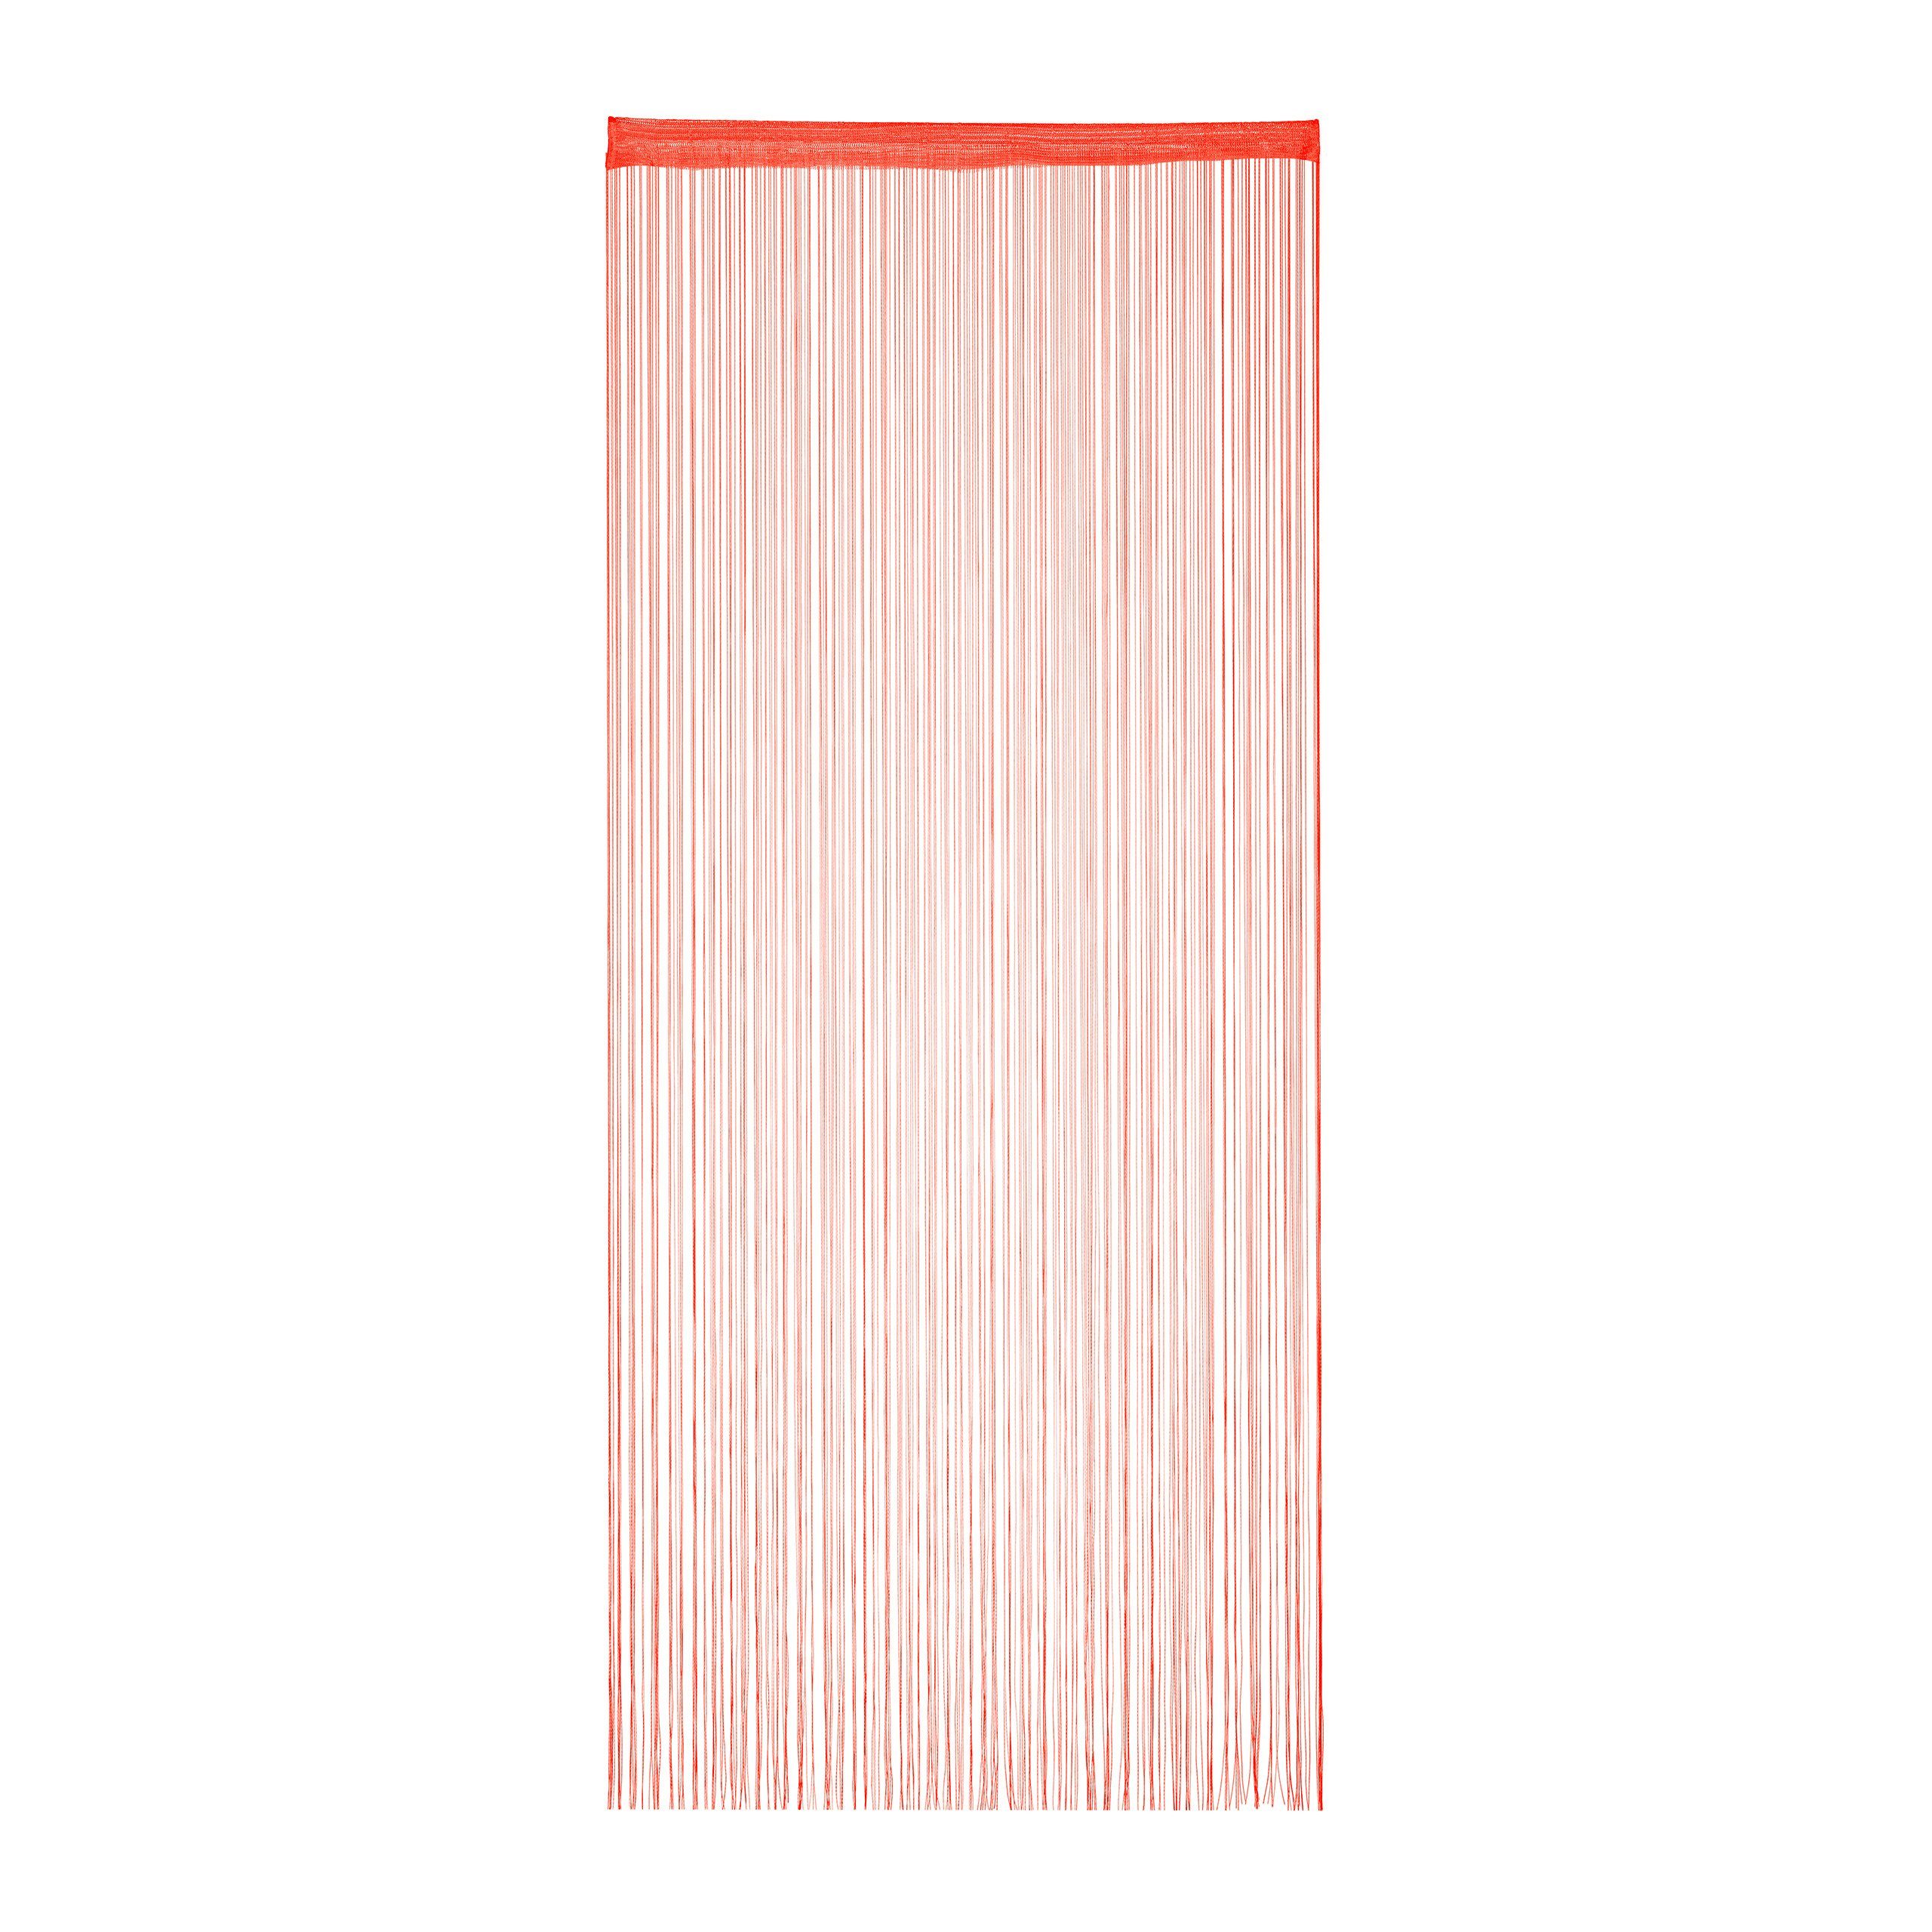 x x 245 rot 1 90 cm, Fadenvorhang Fadenvorhang relaxdays